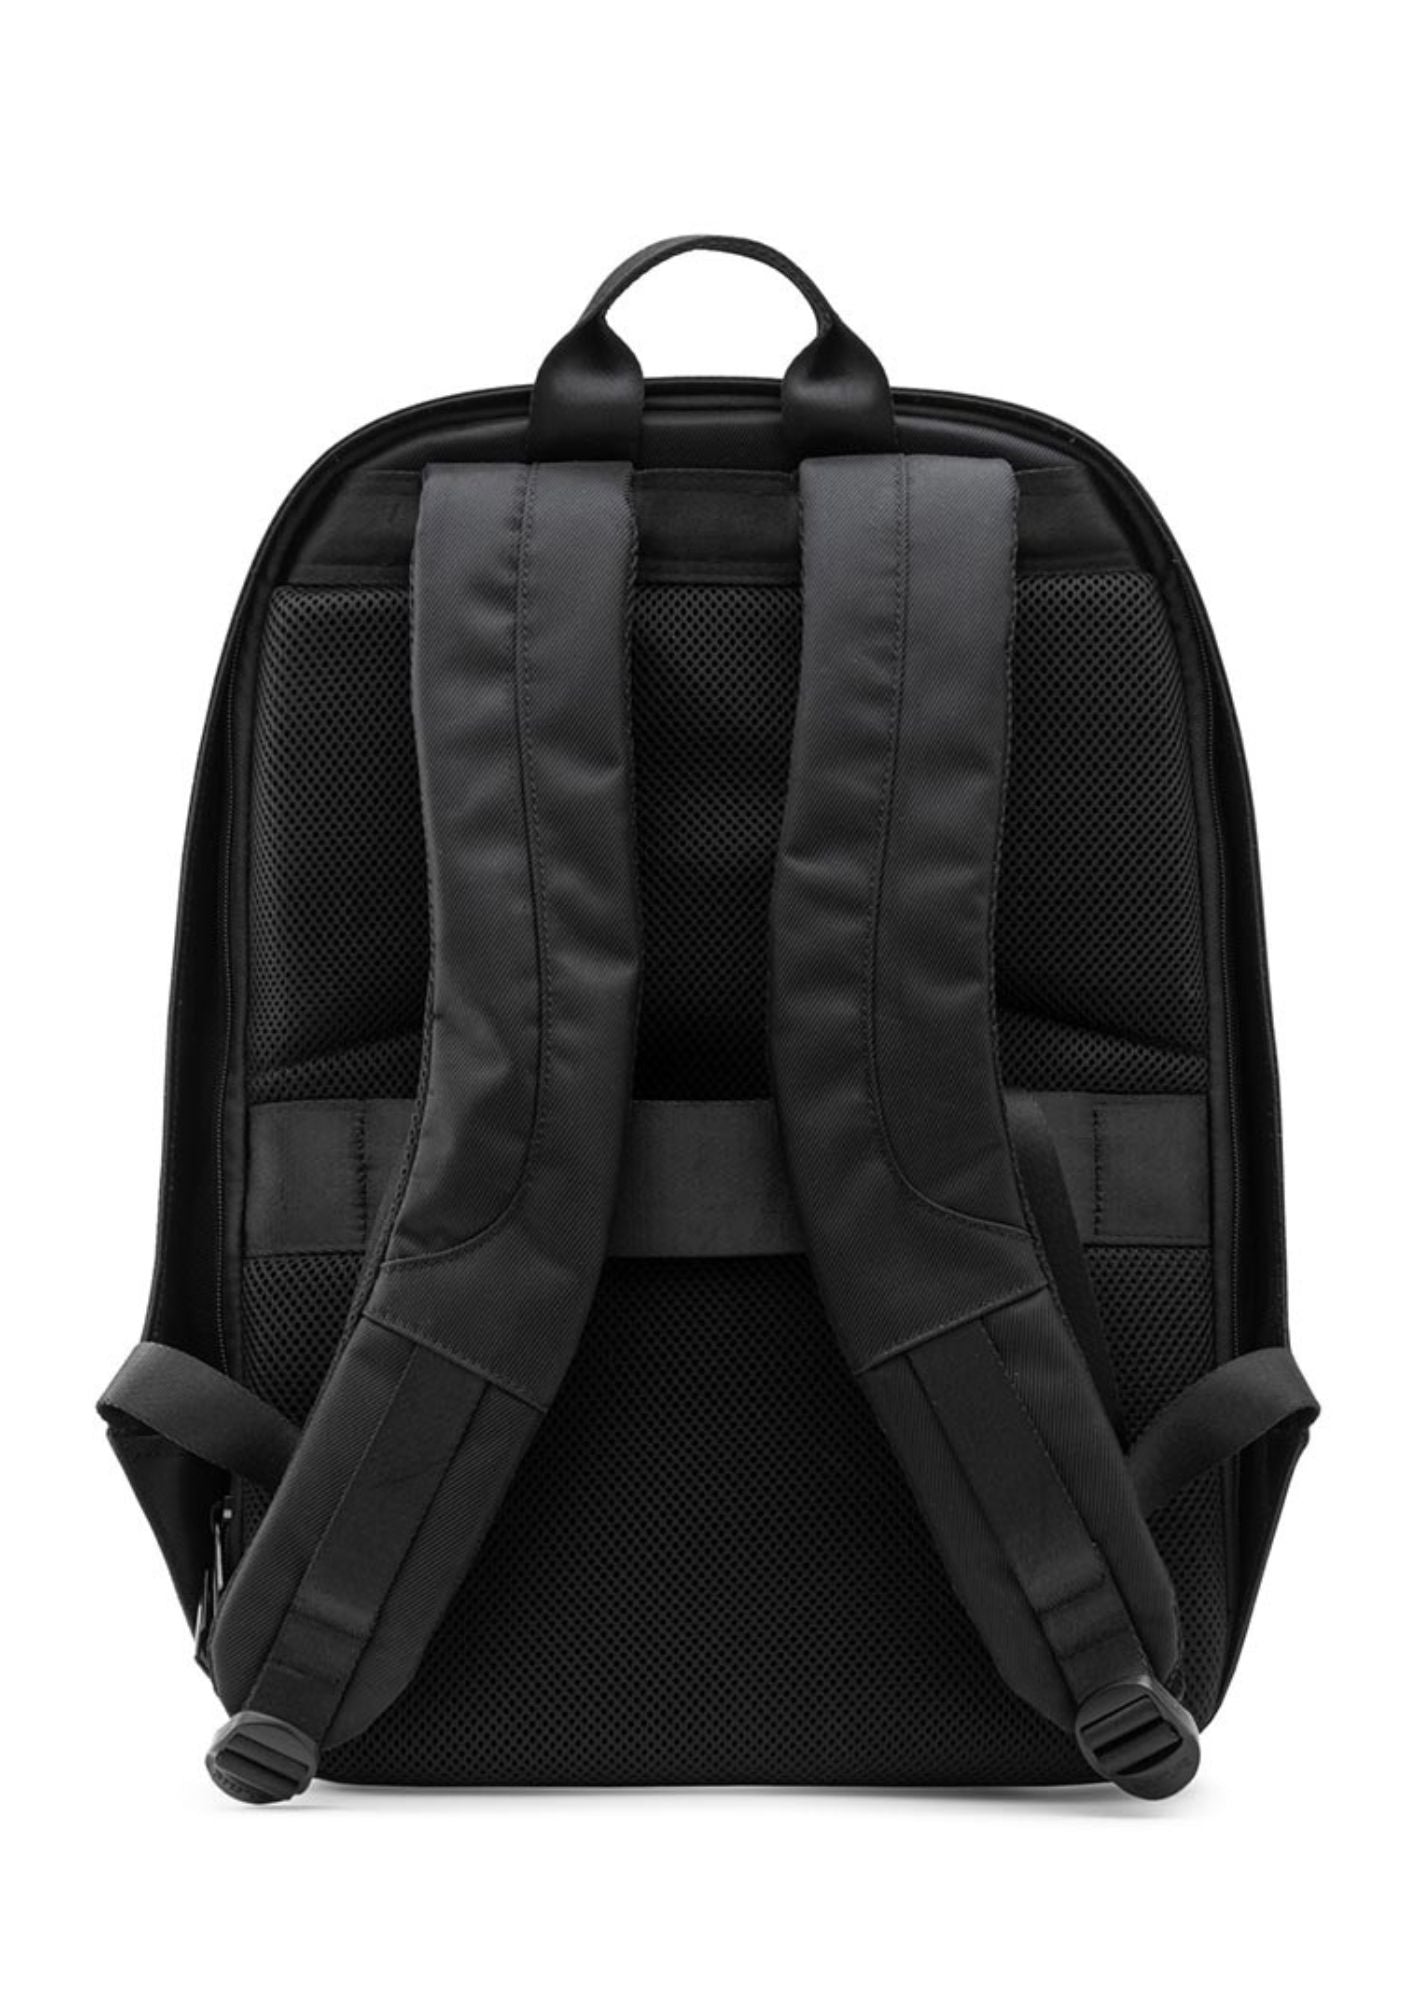 saketi italy - backpack bestlife calpe